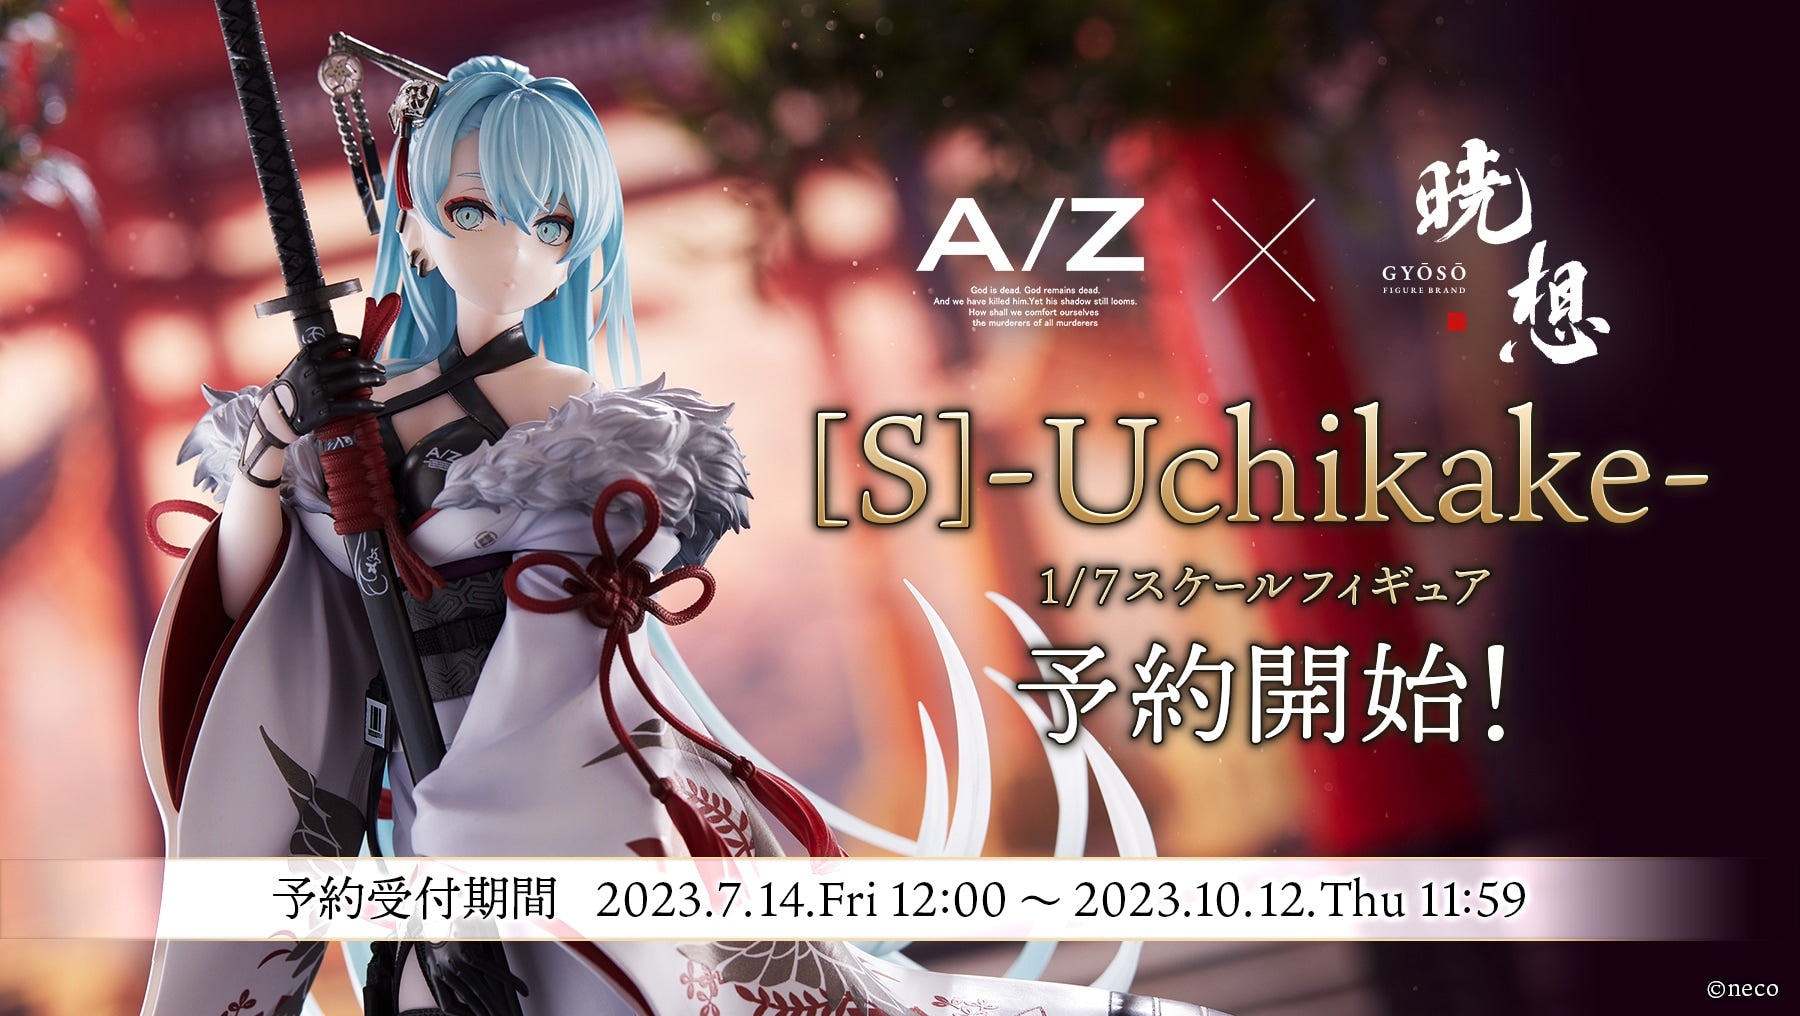 暁想]A-Z:[S]-Uchikake-の予約受付開始 – iDELiTE FiGURE